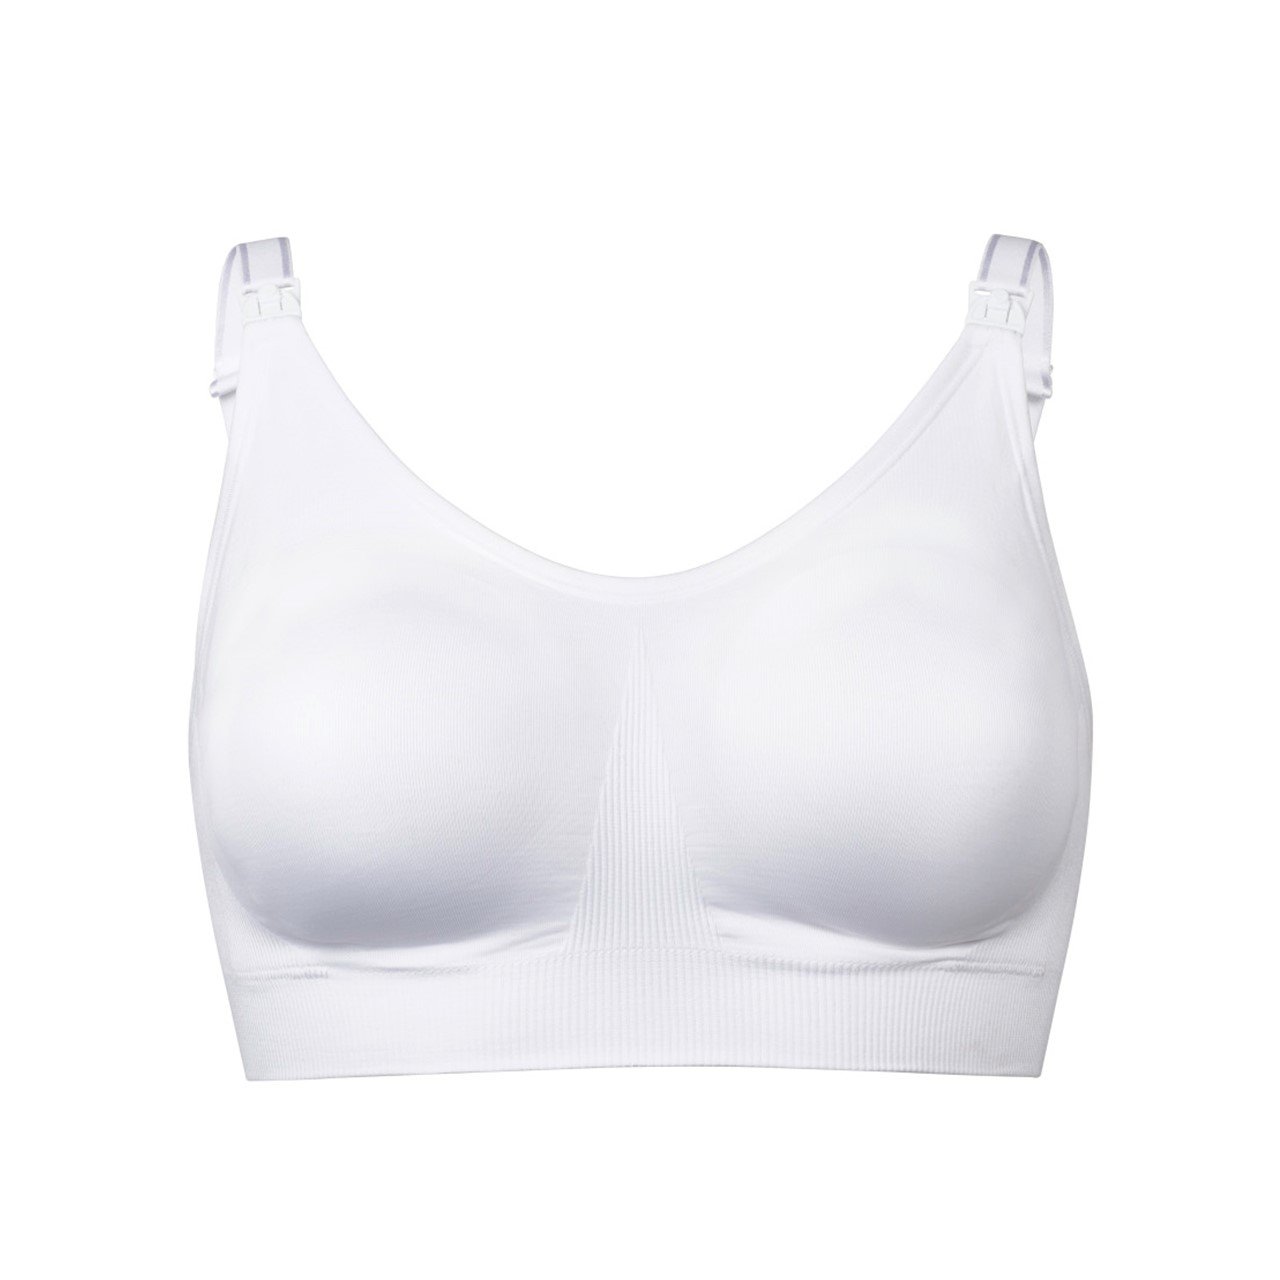 Buy Medela Ultimate BodyFit Bra White Extra Large Size x1 · USA